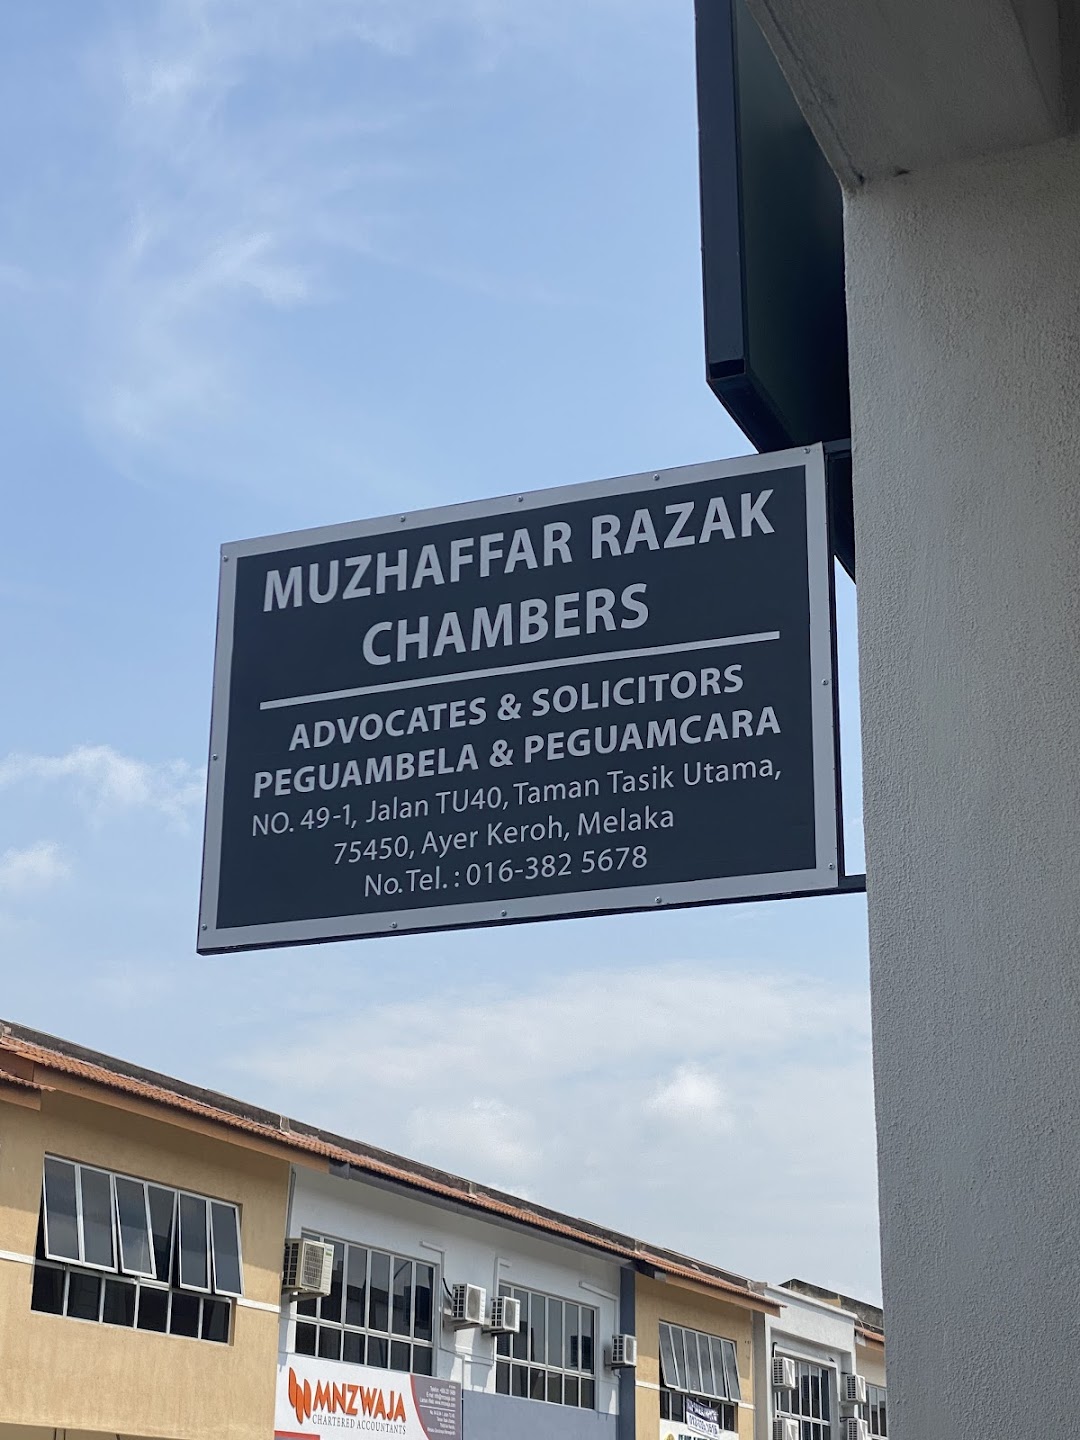 Muzhaffar Razak Chambers - Advocates & Solicitors